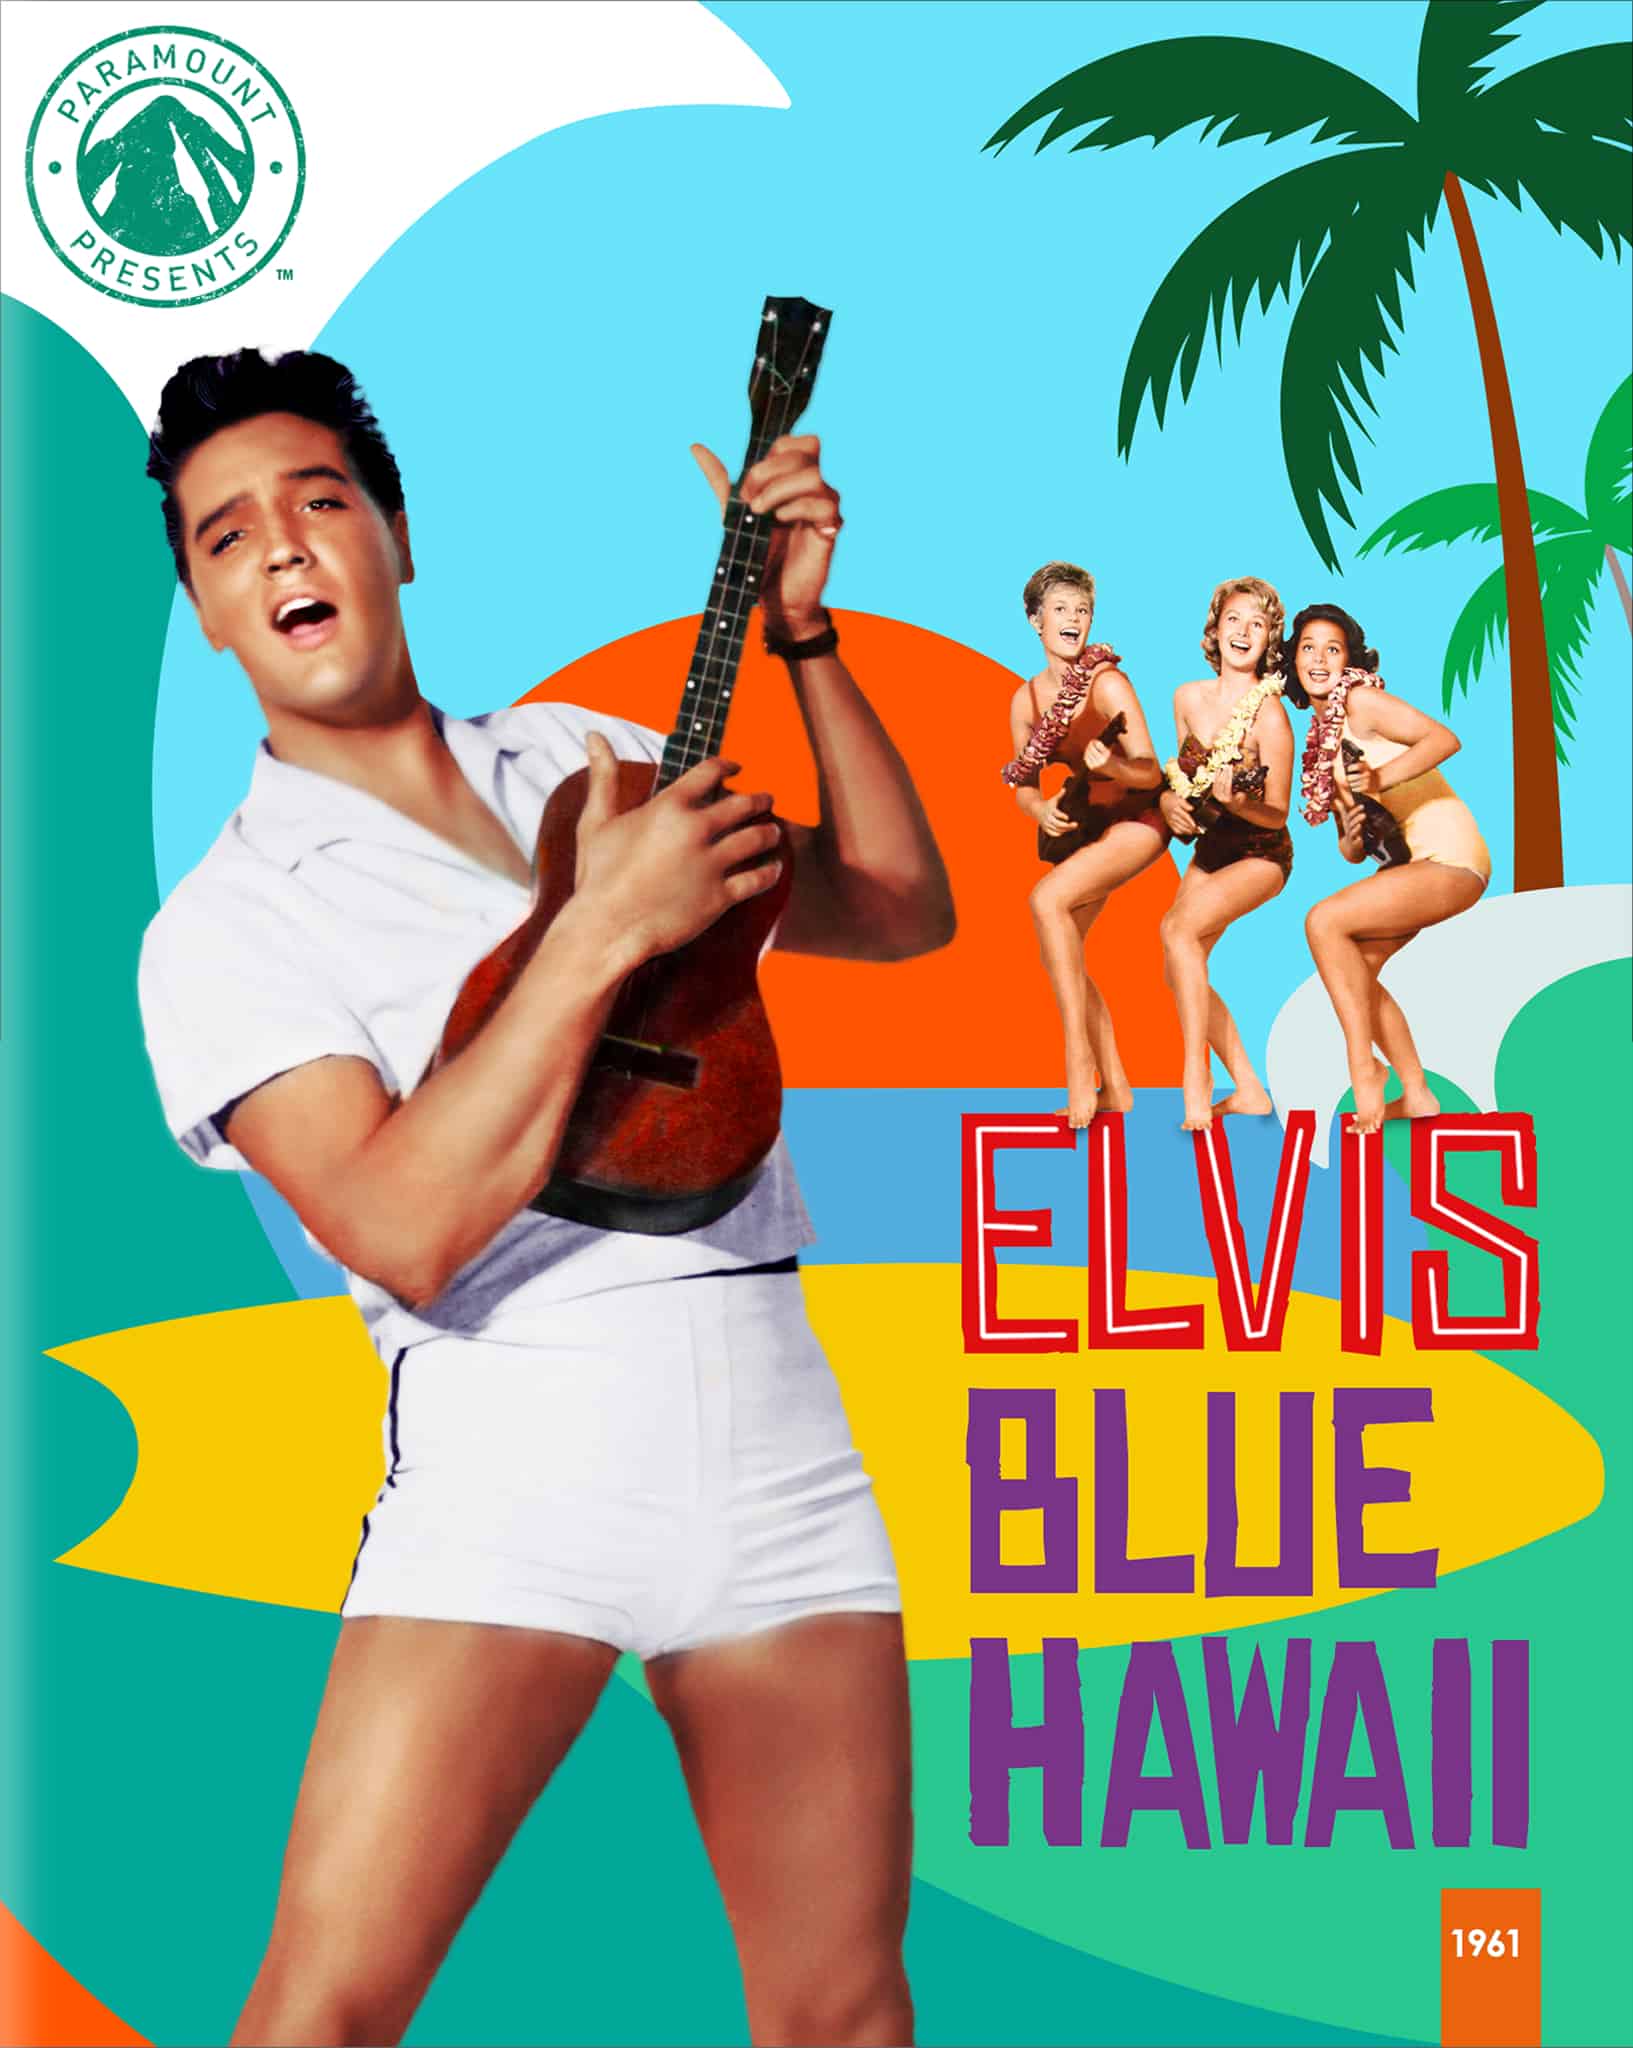 Blue Hawaii positively ushers in 4K Elvis on November 15th! 2